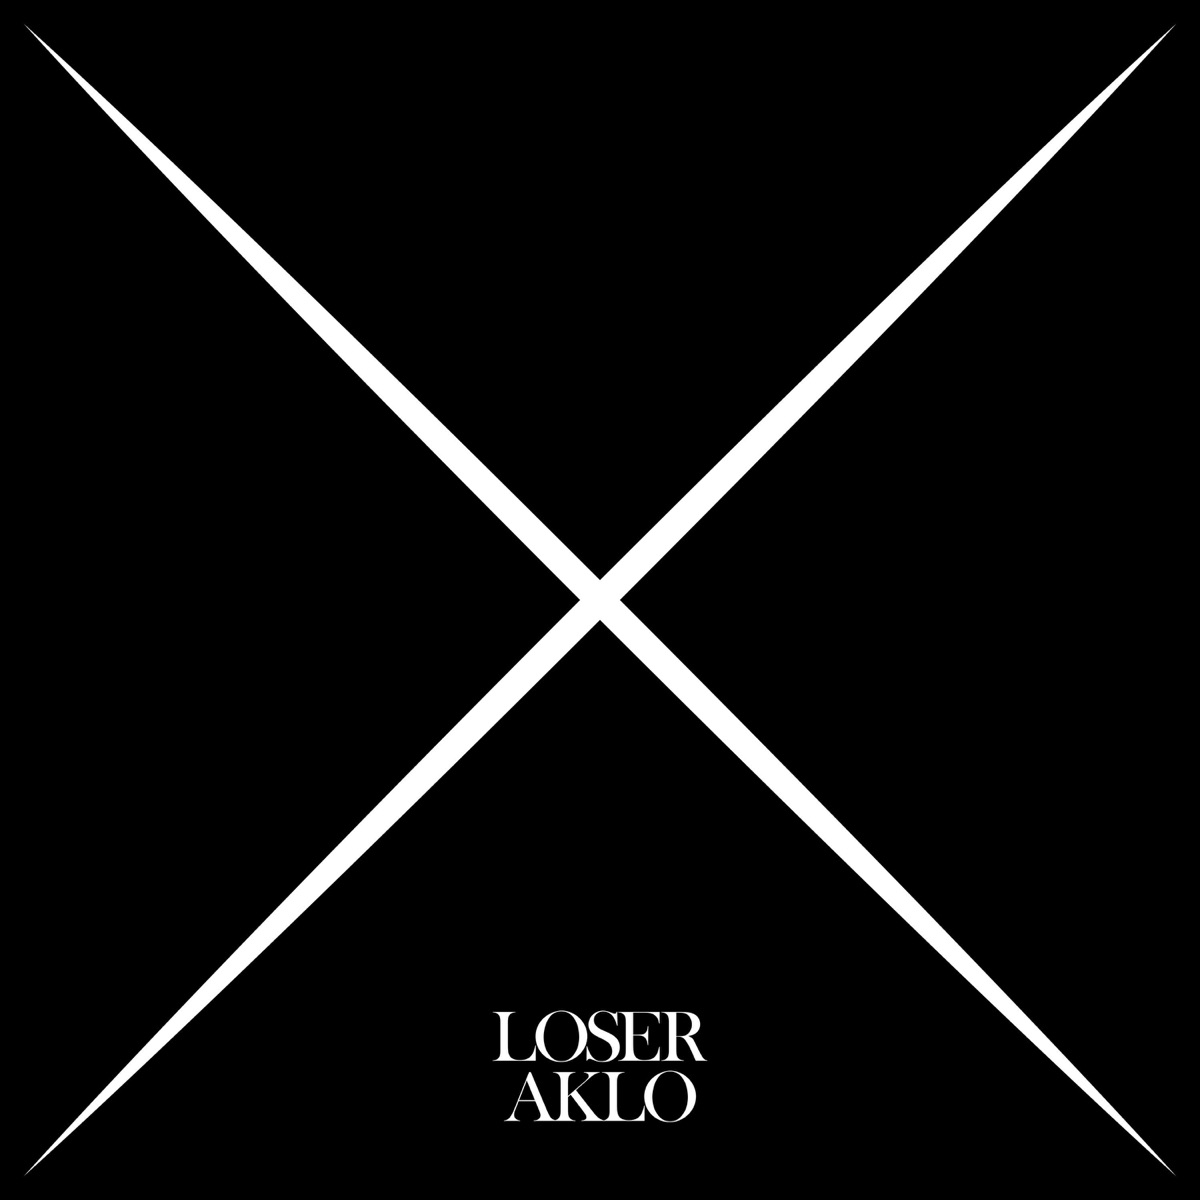 『AKLO - LOSER 歌詞』収録の『LOSER』ジャケット